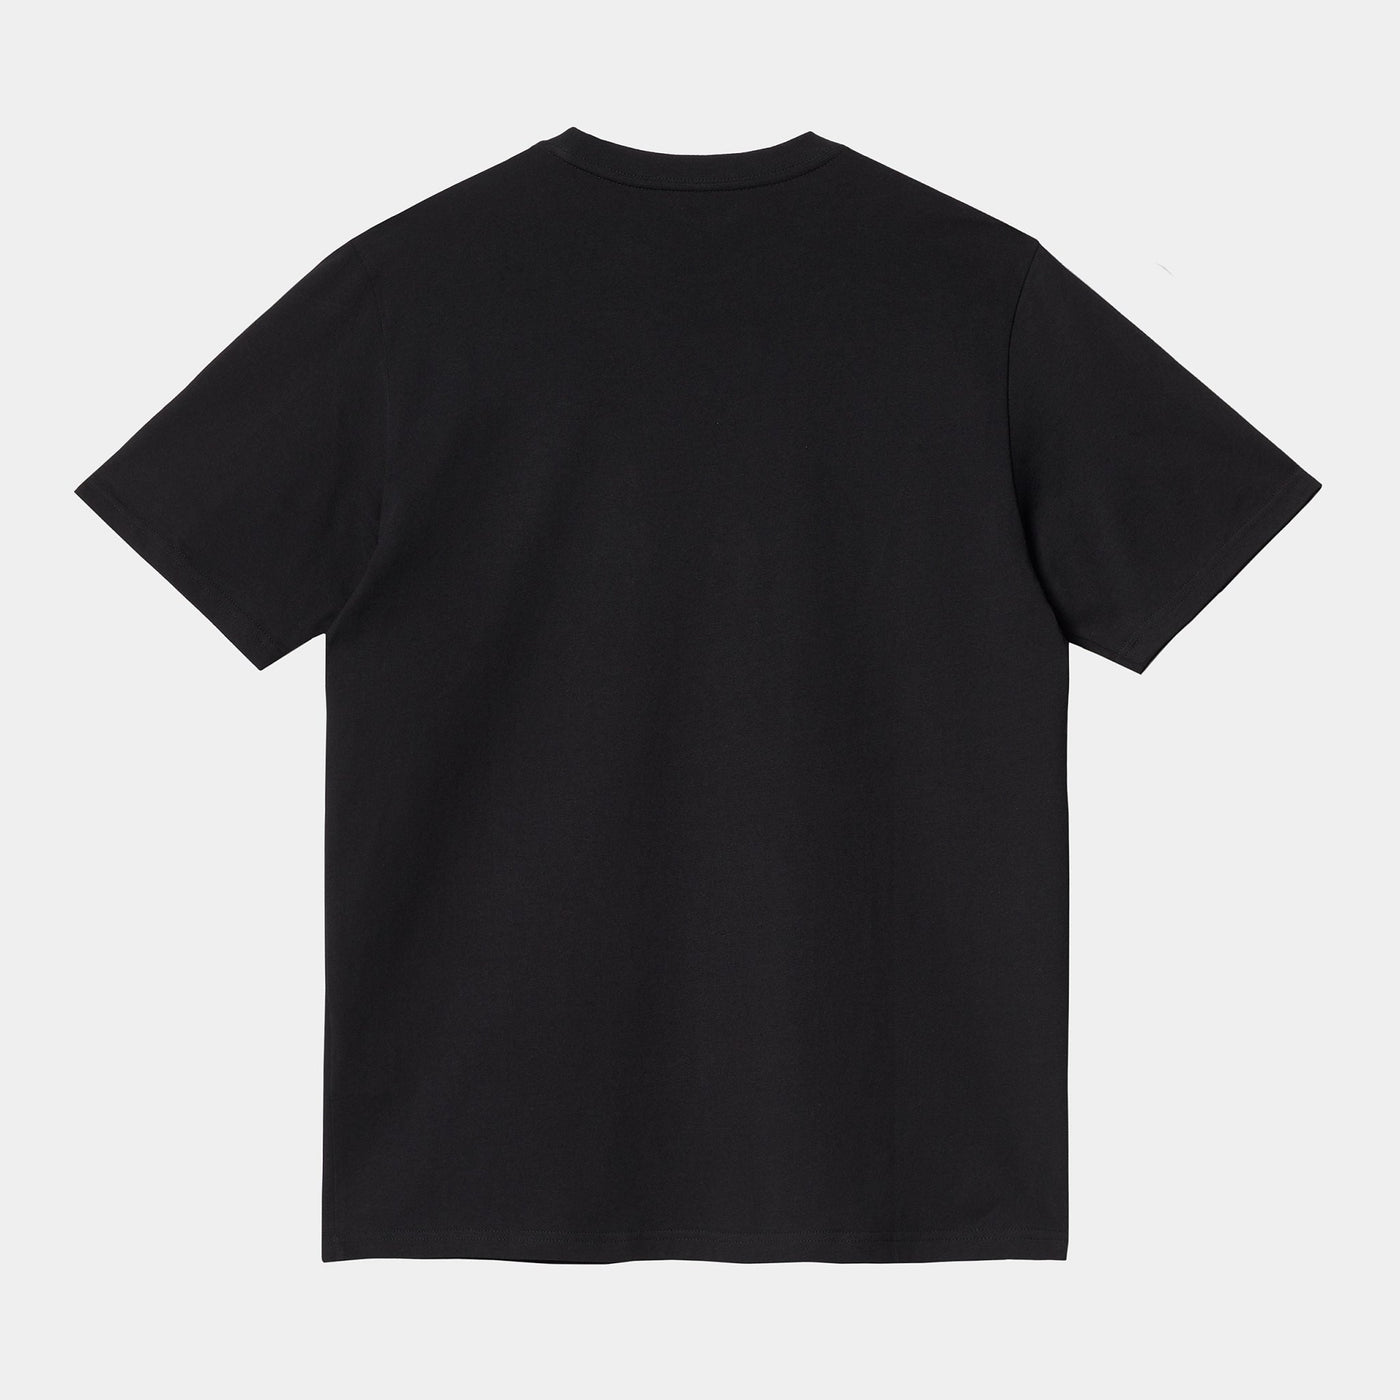 Carhartt WIP - S/S Pocket T-Shirt Black - Lothaire